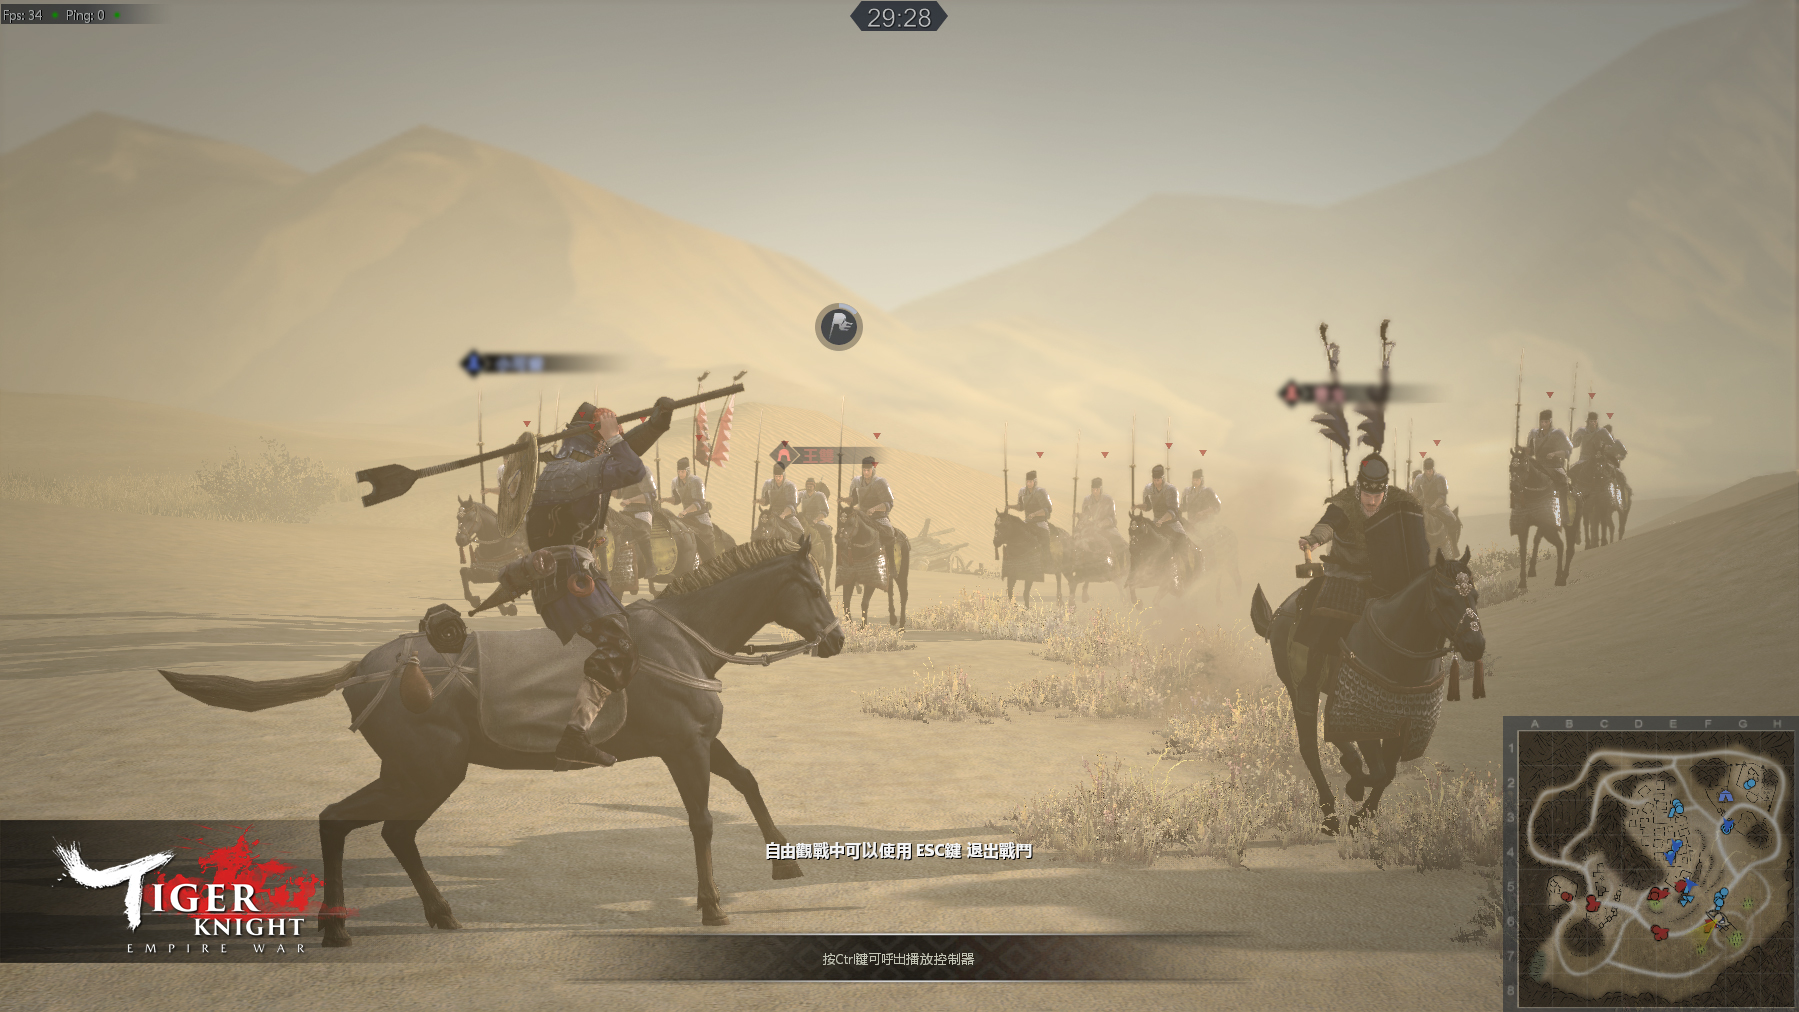 Tiger Knight: Empire War - Supply Pack screenshot